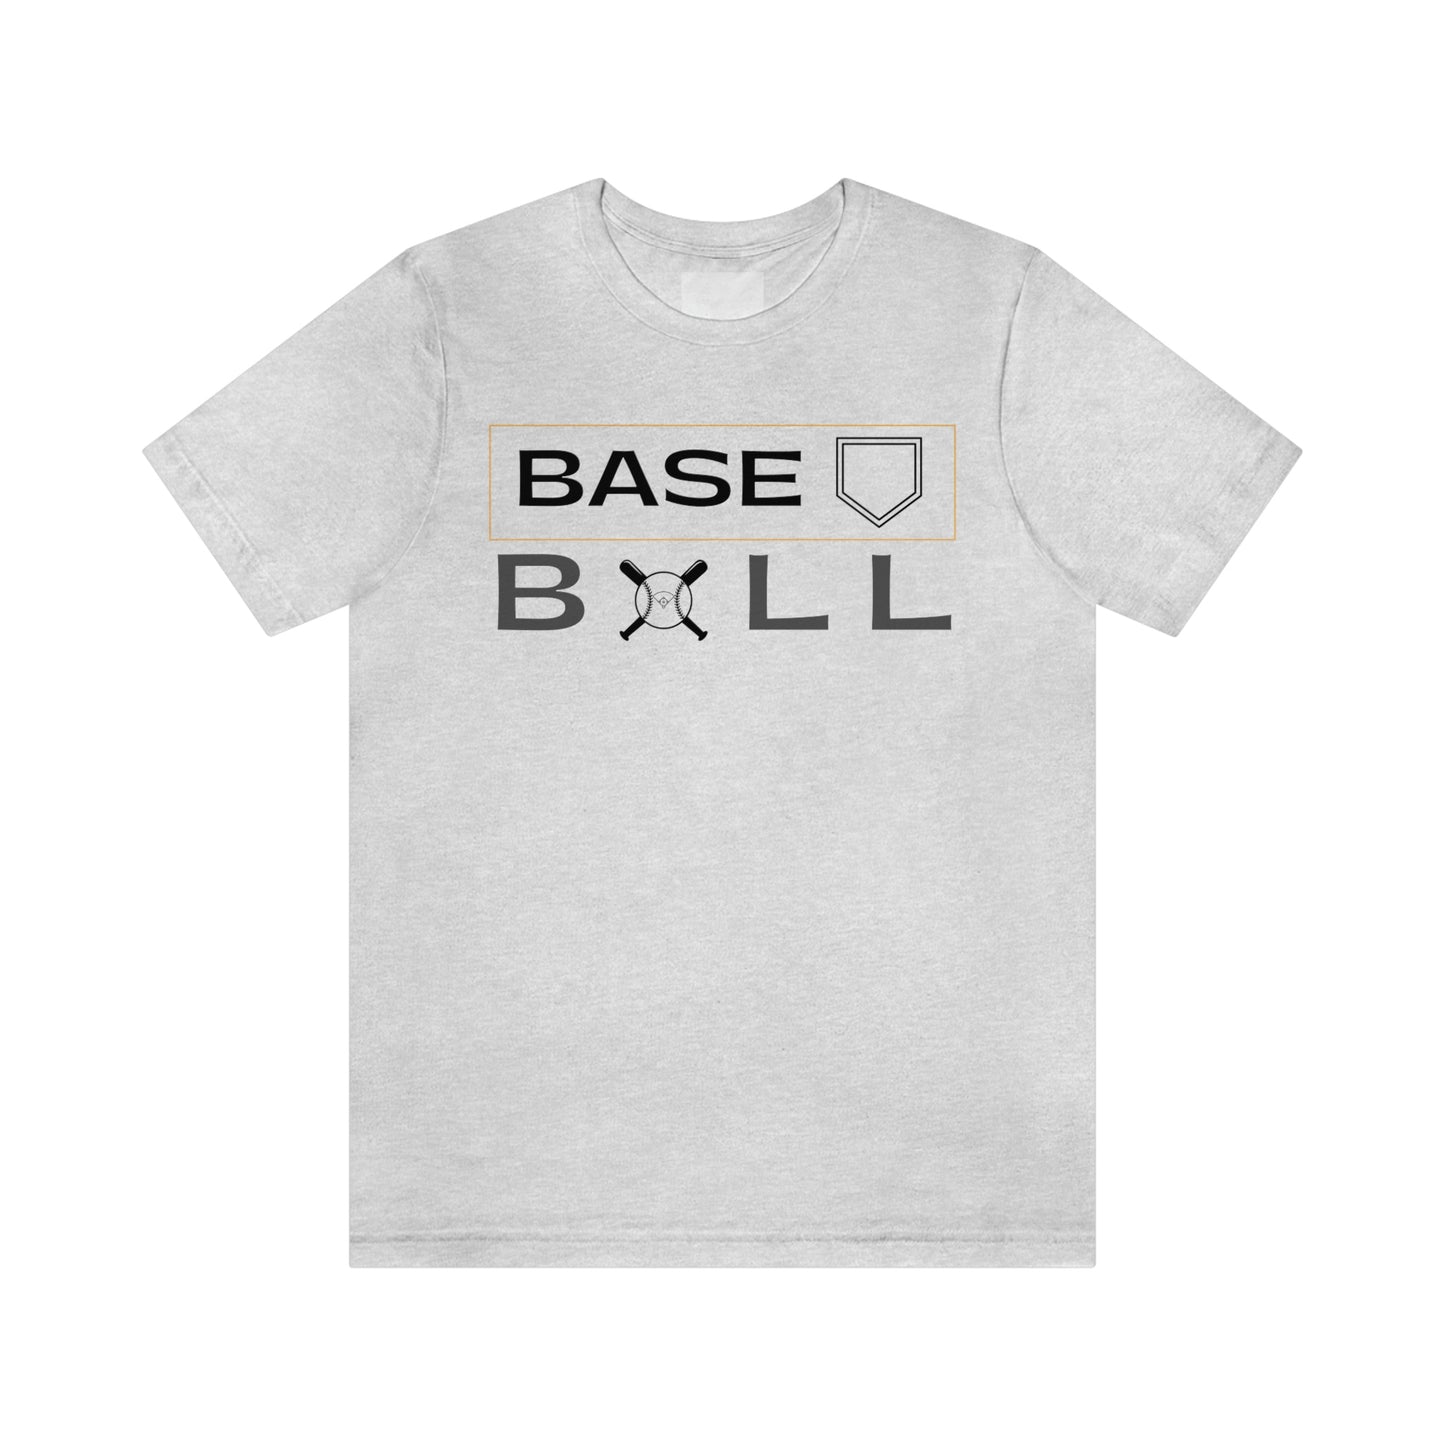 The “Base Ball” T-Shirt